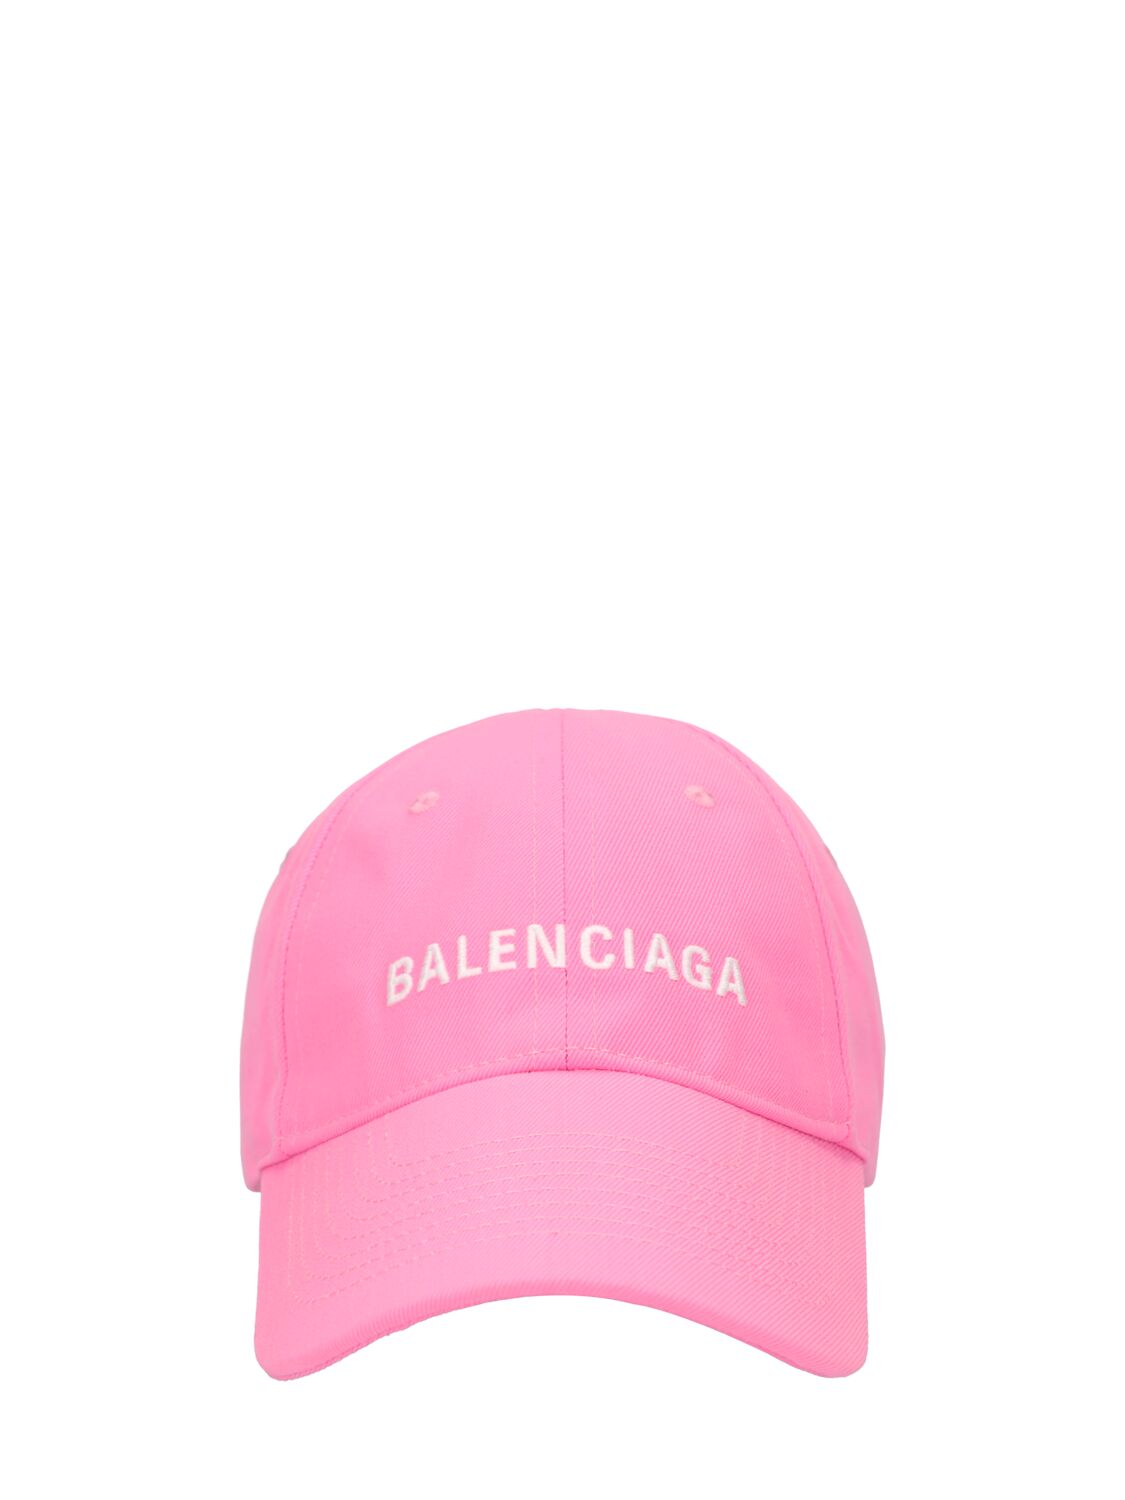 Balenciaga Babies' Logo Tech Baseball Cap In Hot Pink